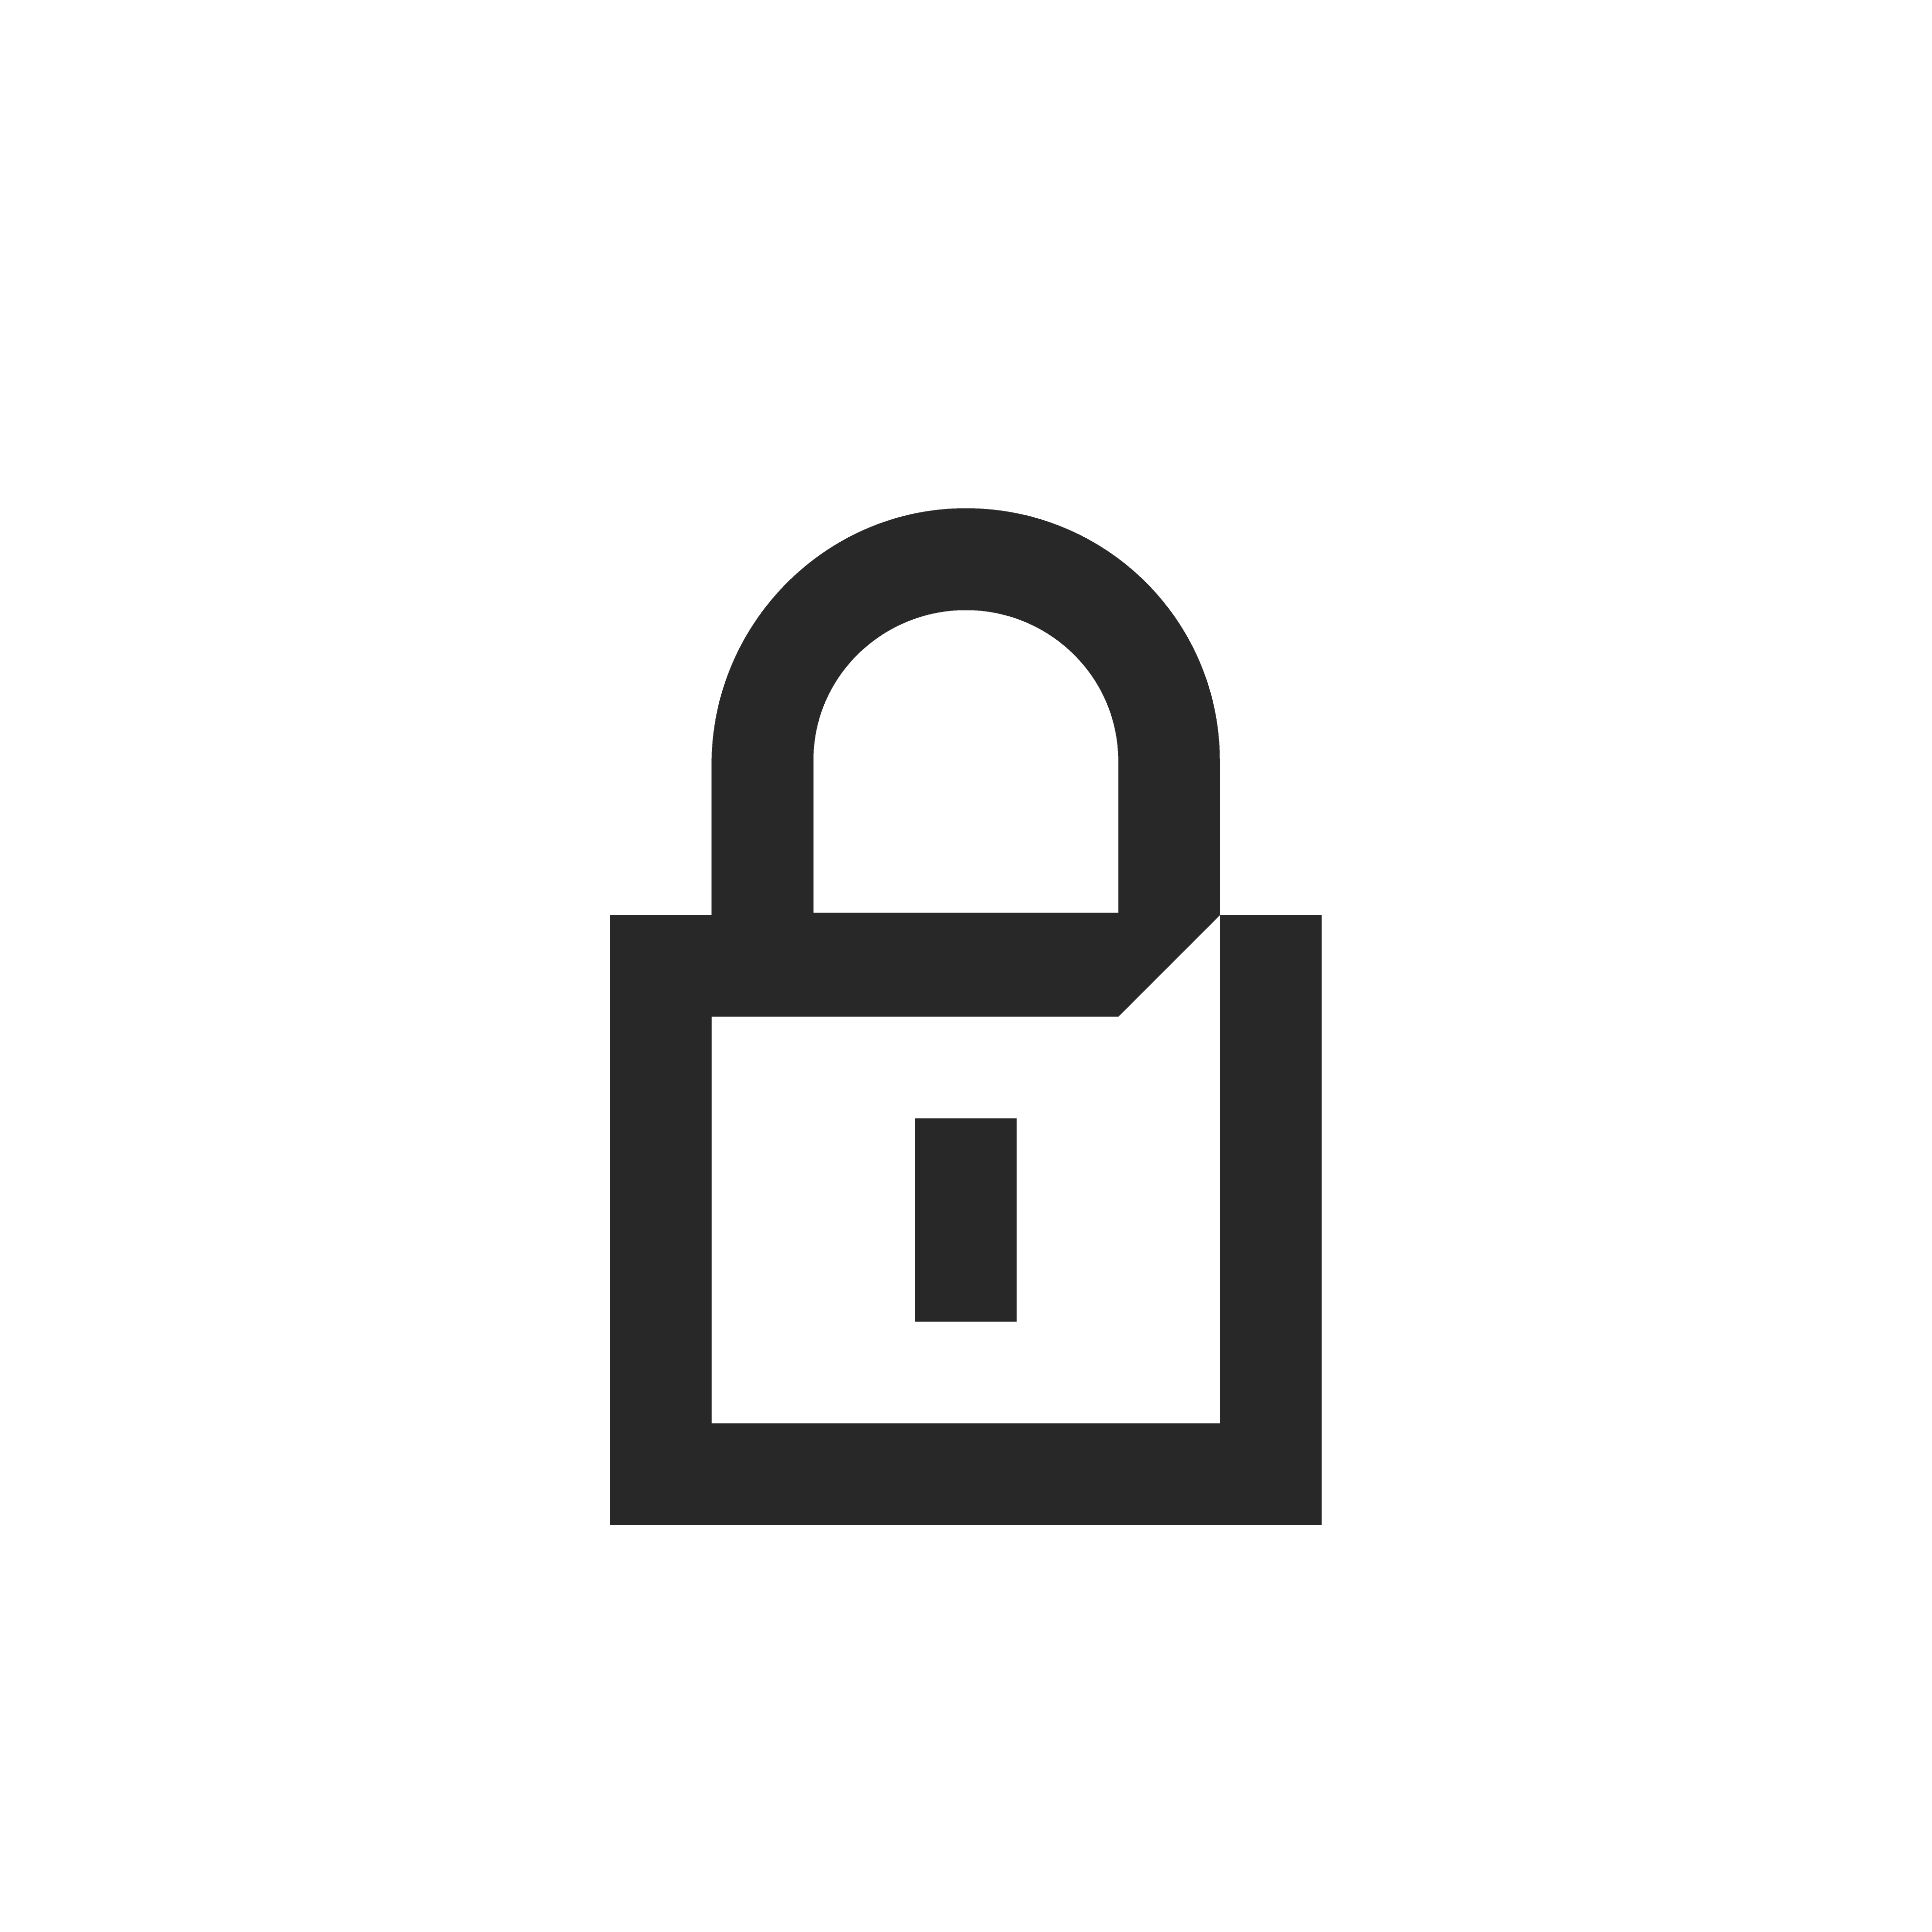 KYOCERA_RGB_Dark-grey_Icons_Security